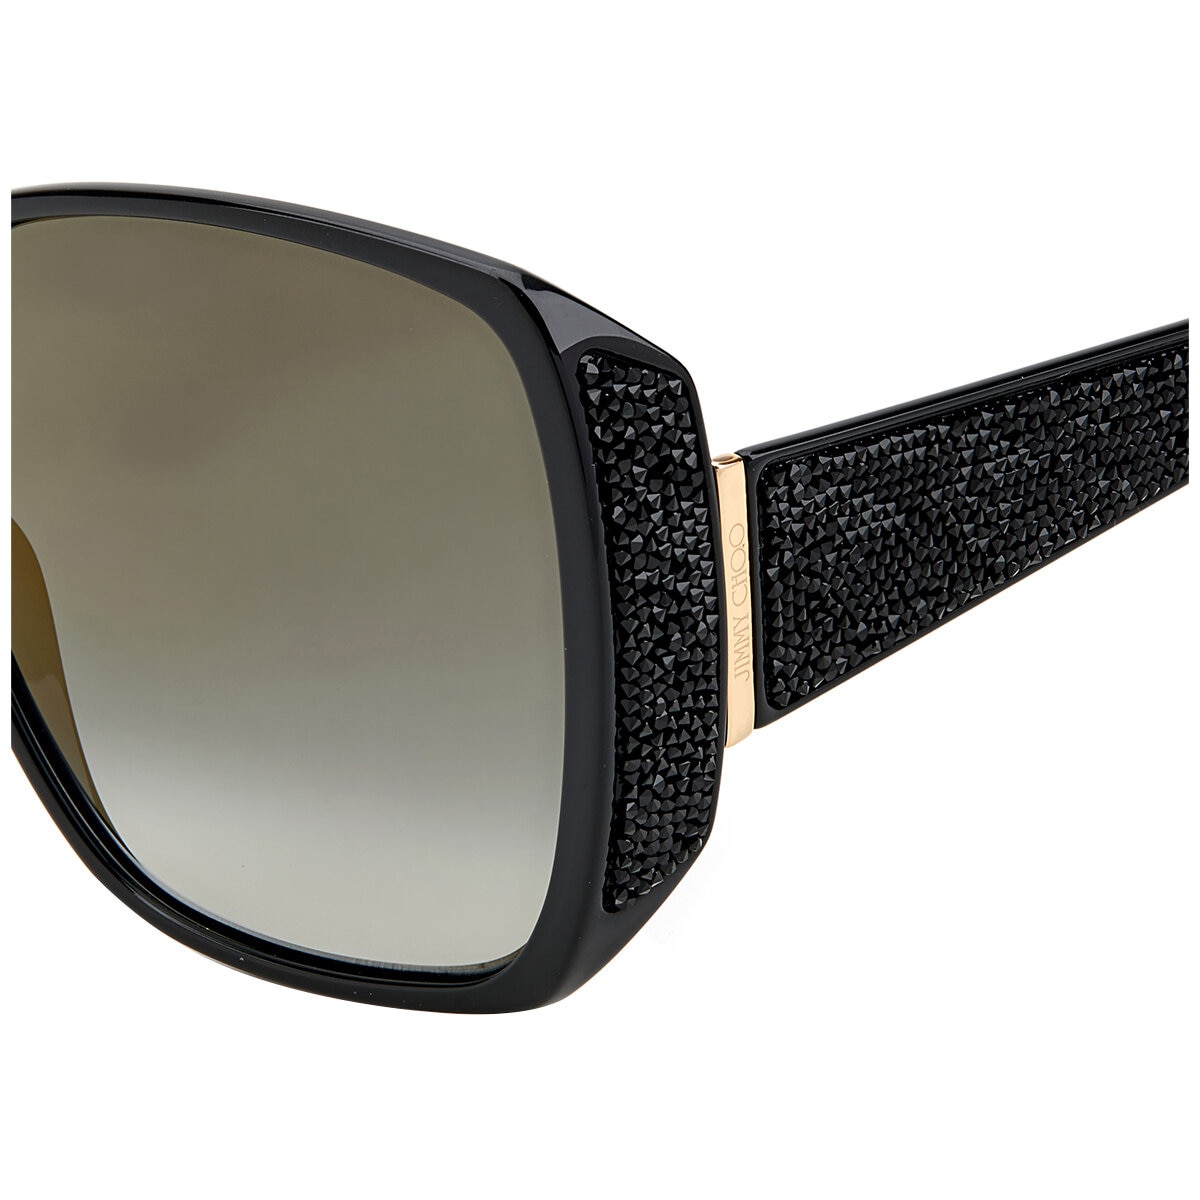 Jimmy Choo Cloe/S Women's Sunglasses